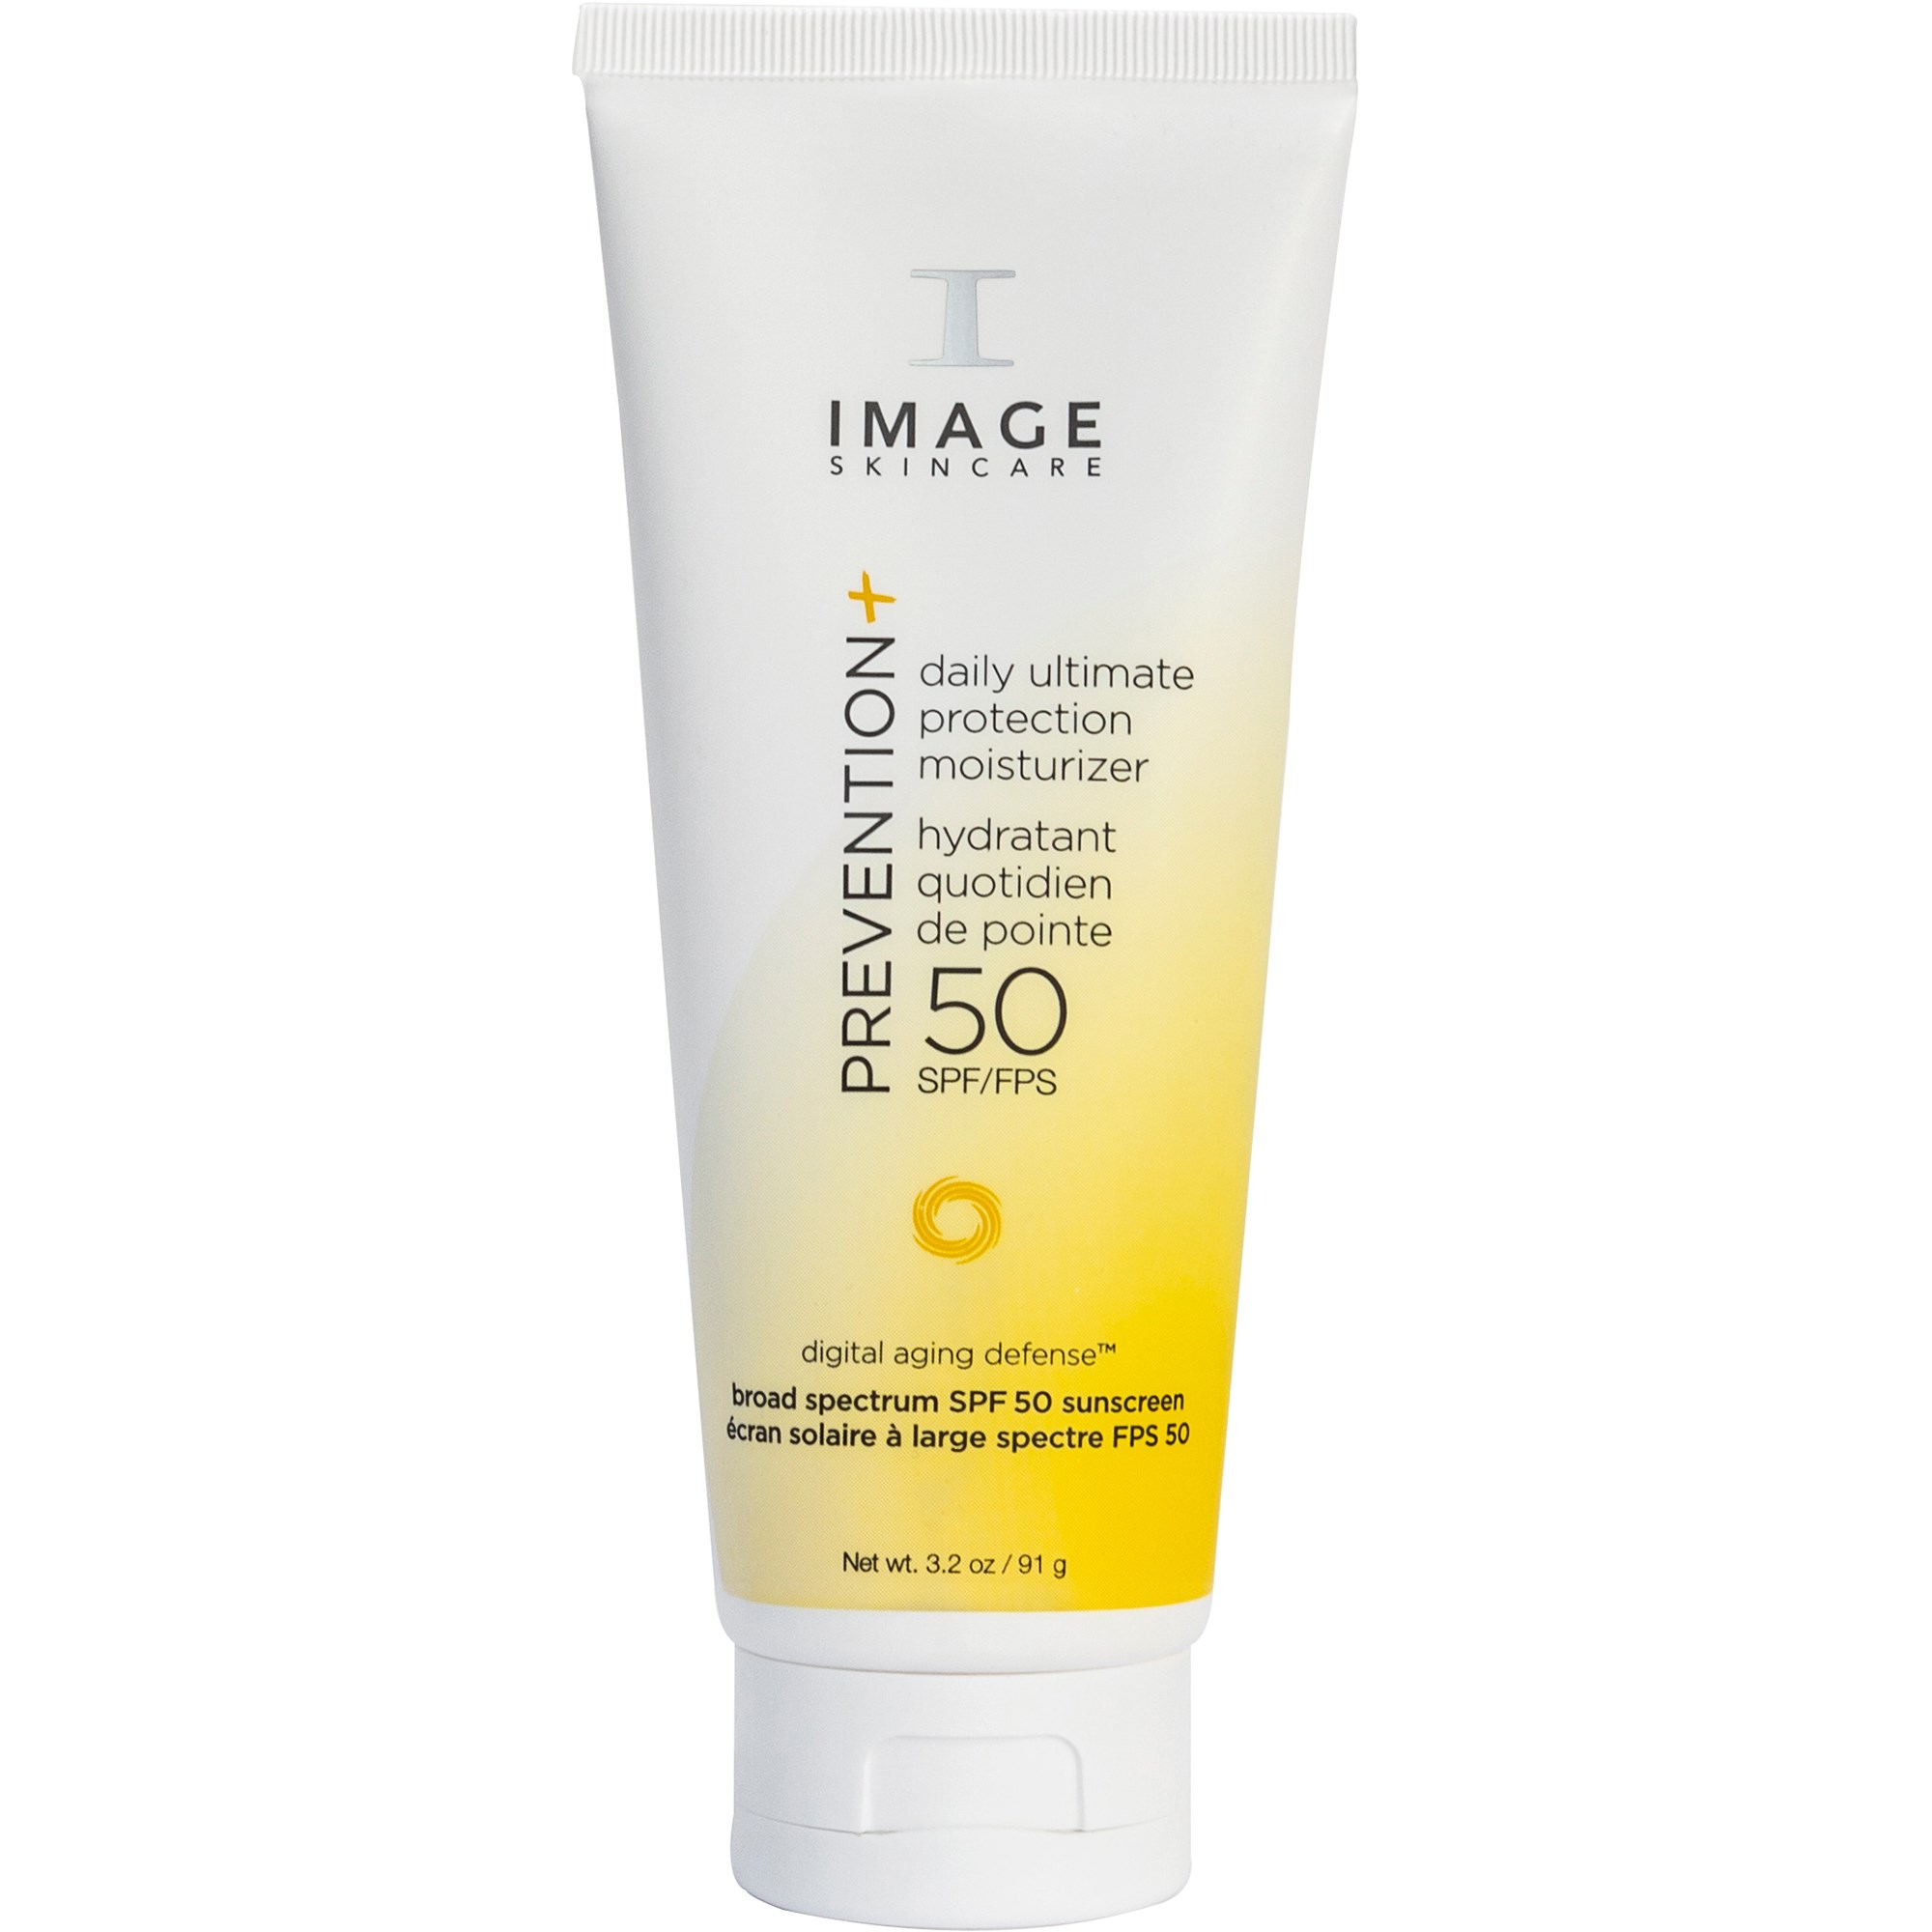 Läs mer om IMAGE Skincare Prevention+ Daily Ultimate Protection Mosturizer SPF 50